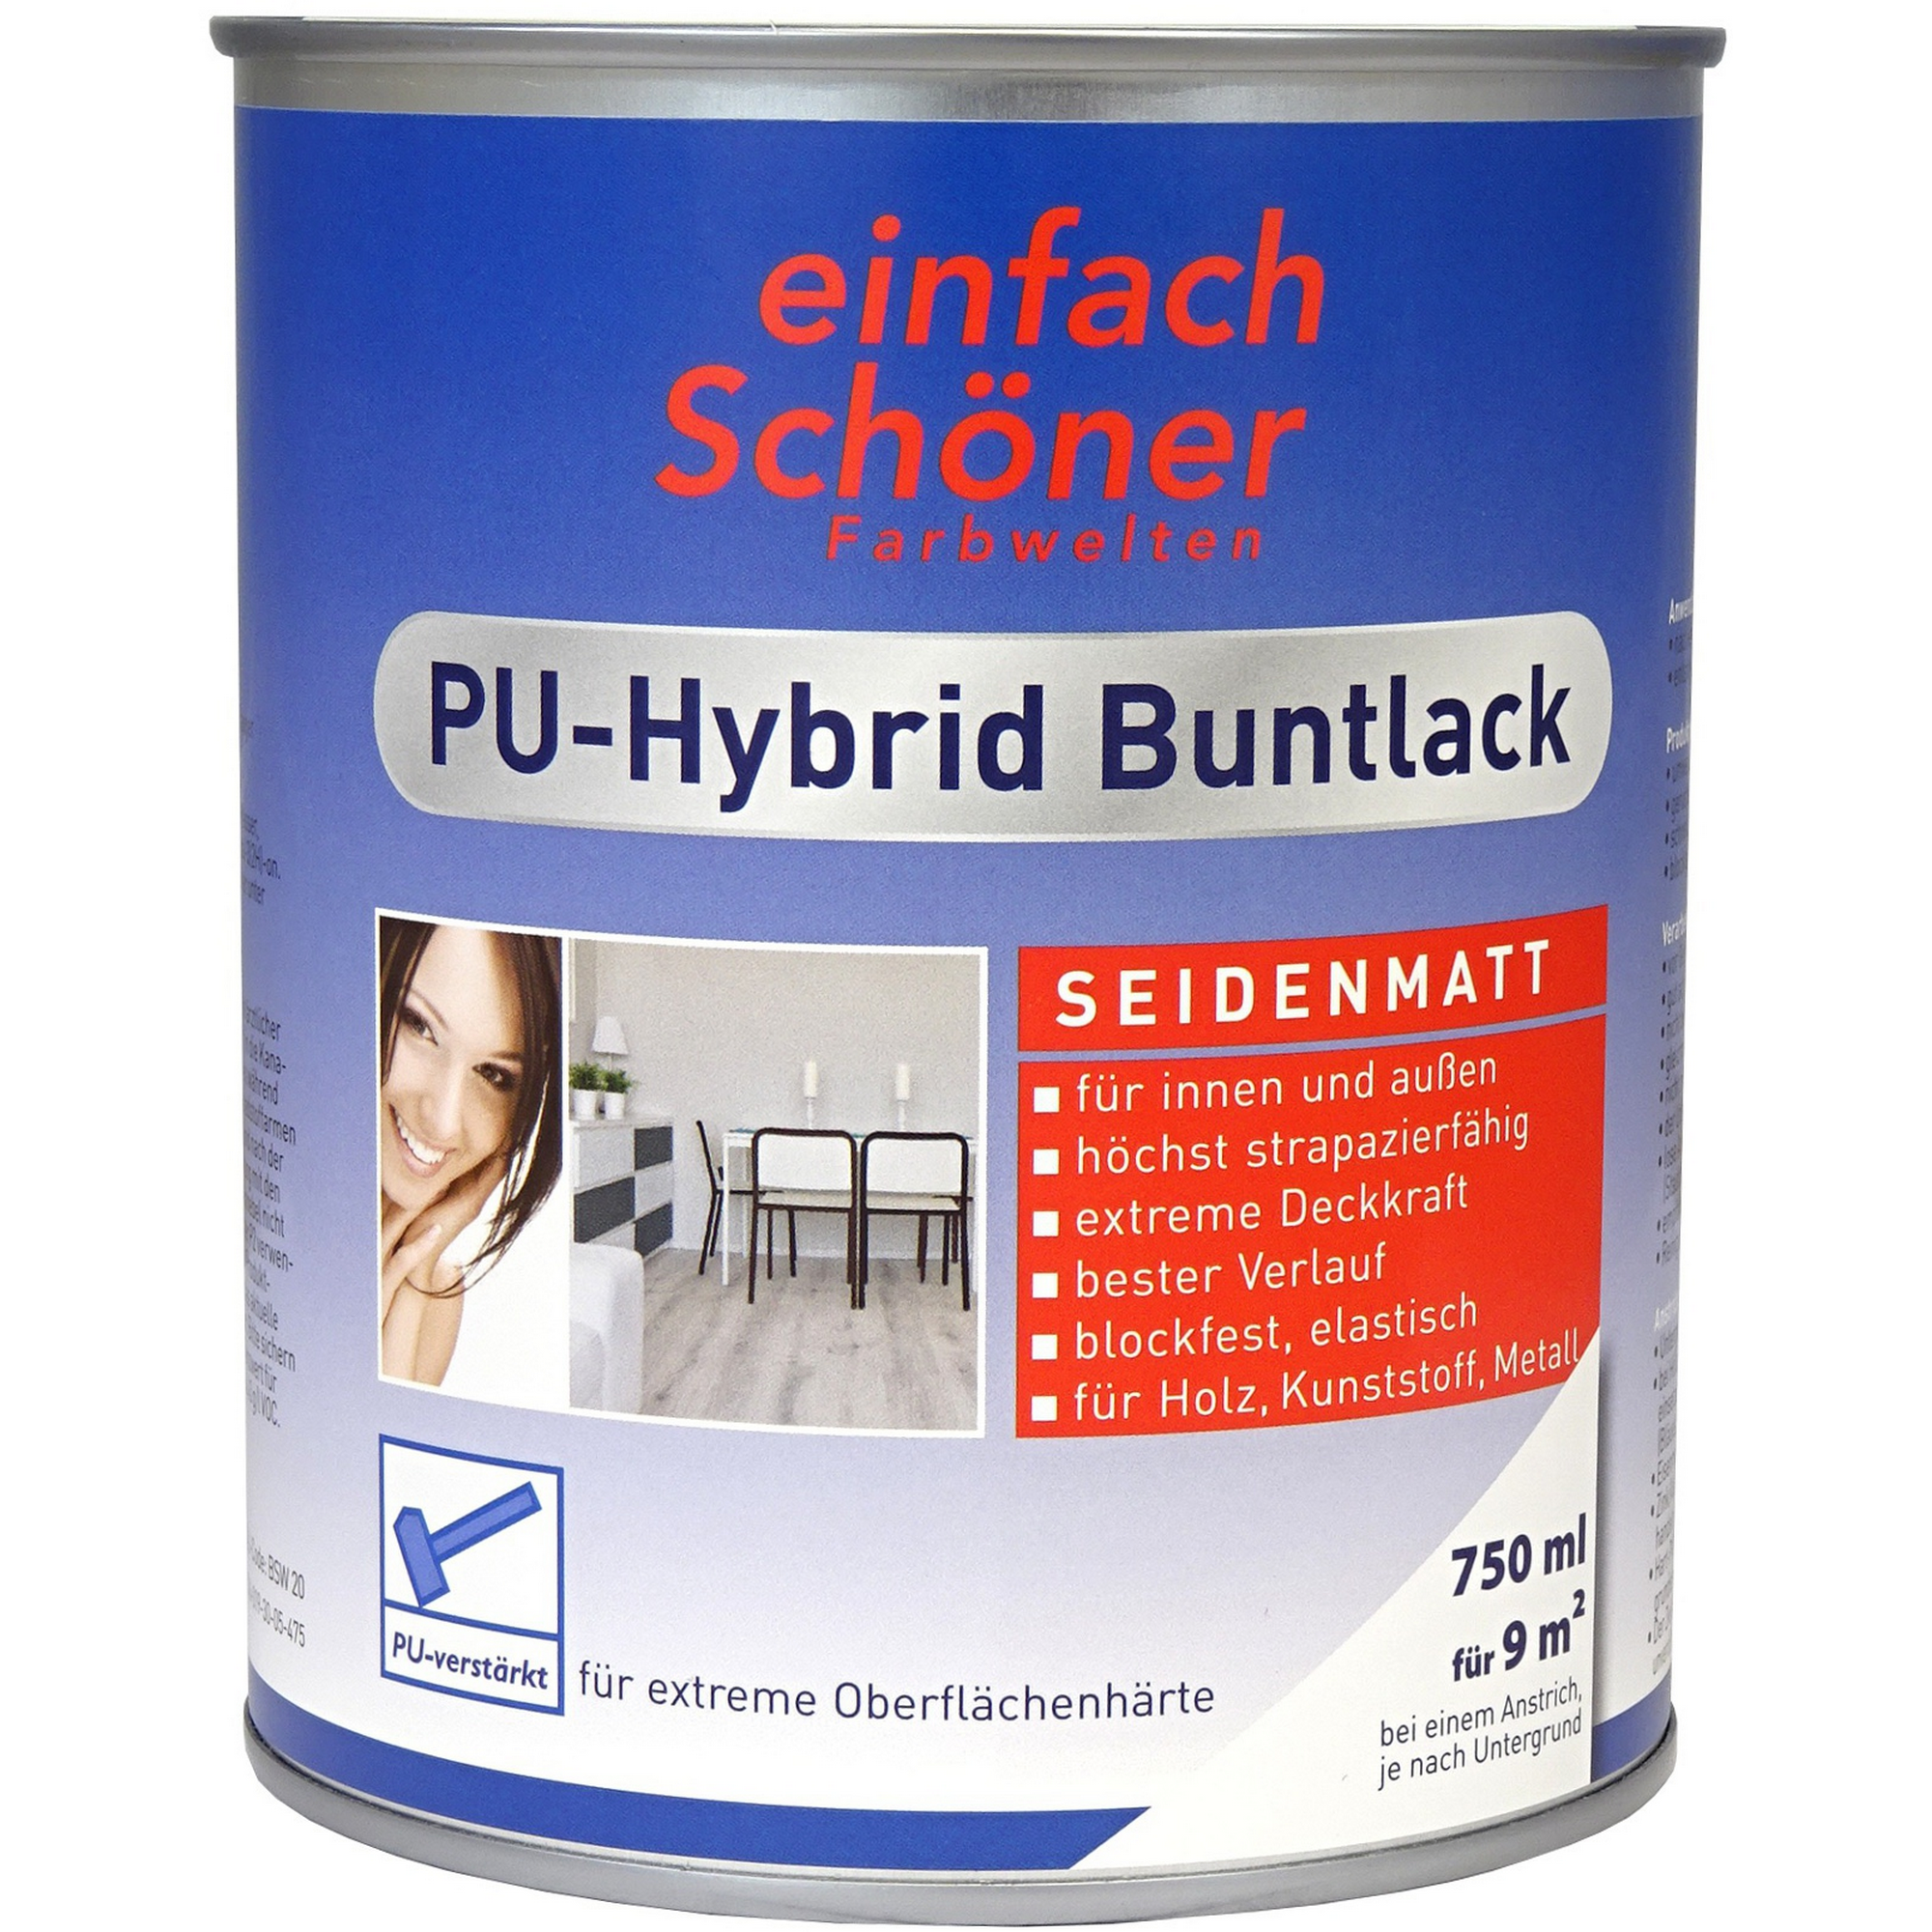 PU-Hybrid Buntlack schokobraun seidenmatt 750 ml + product picture